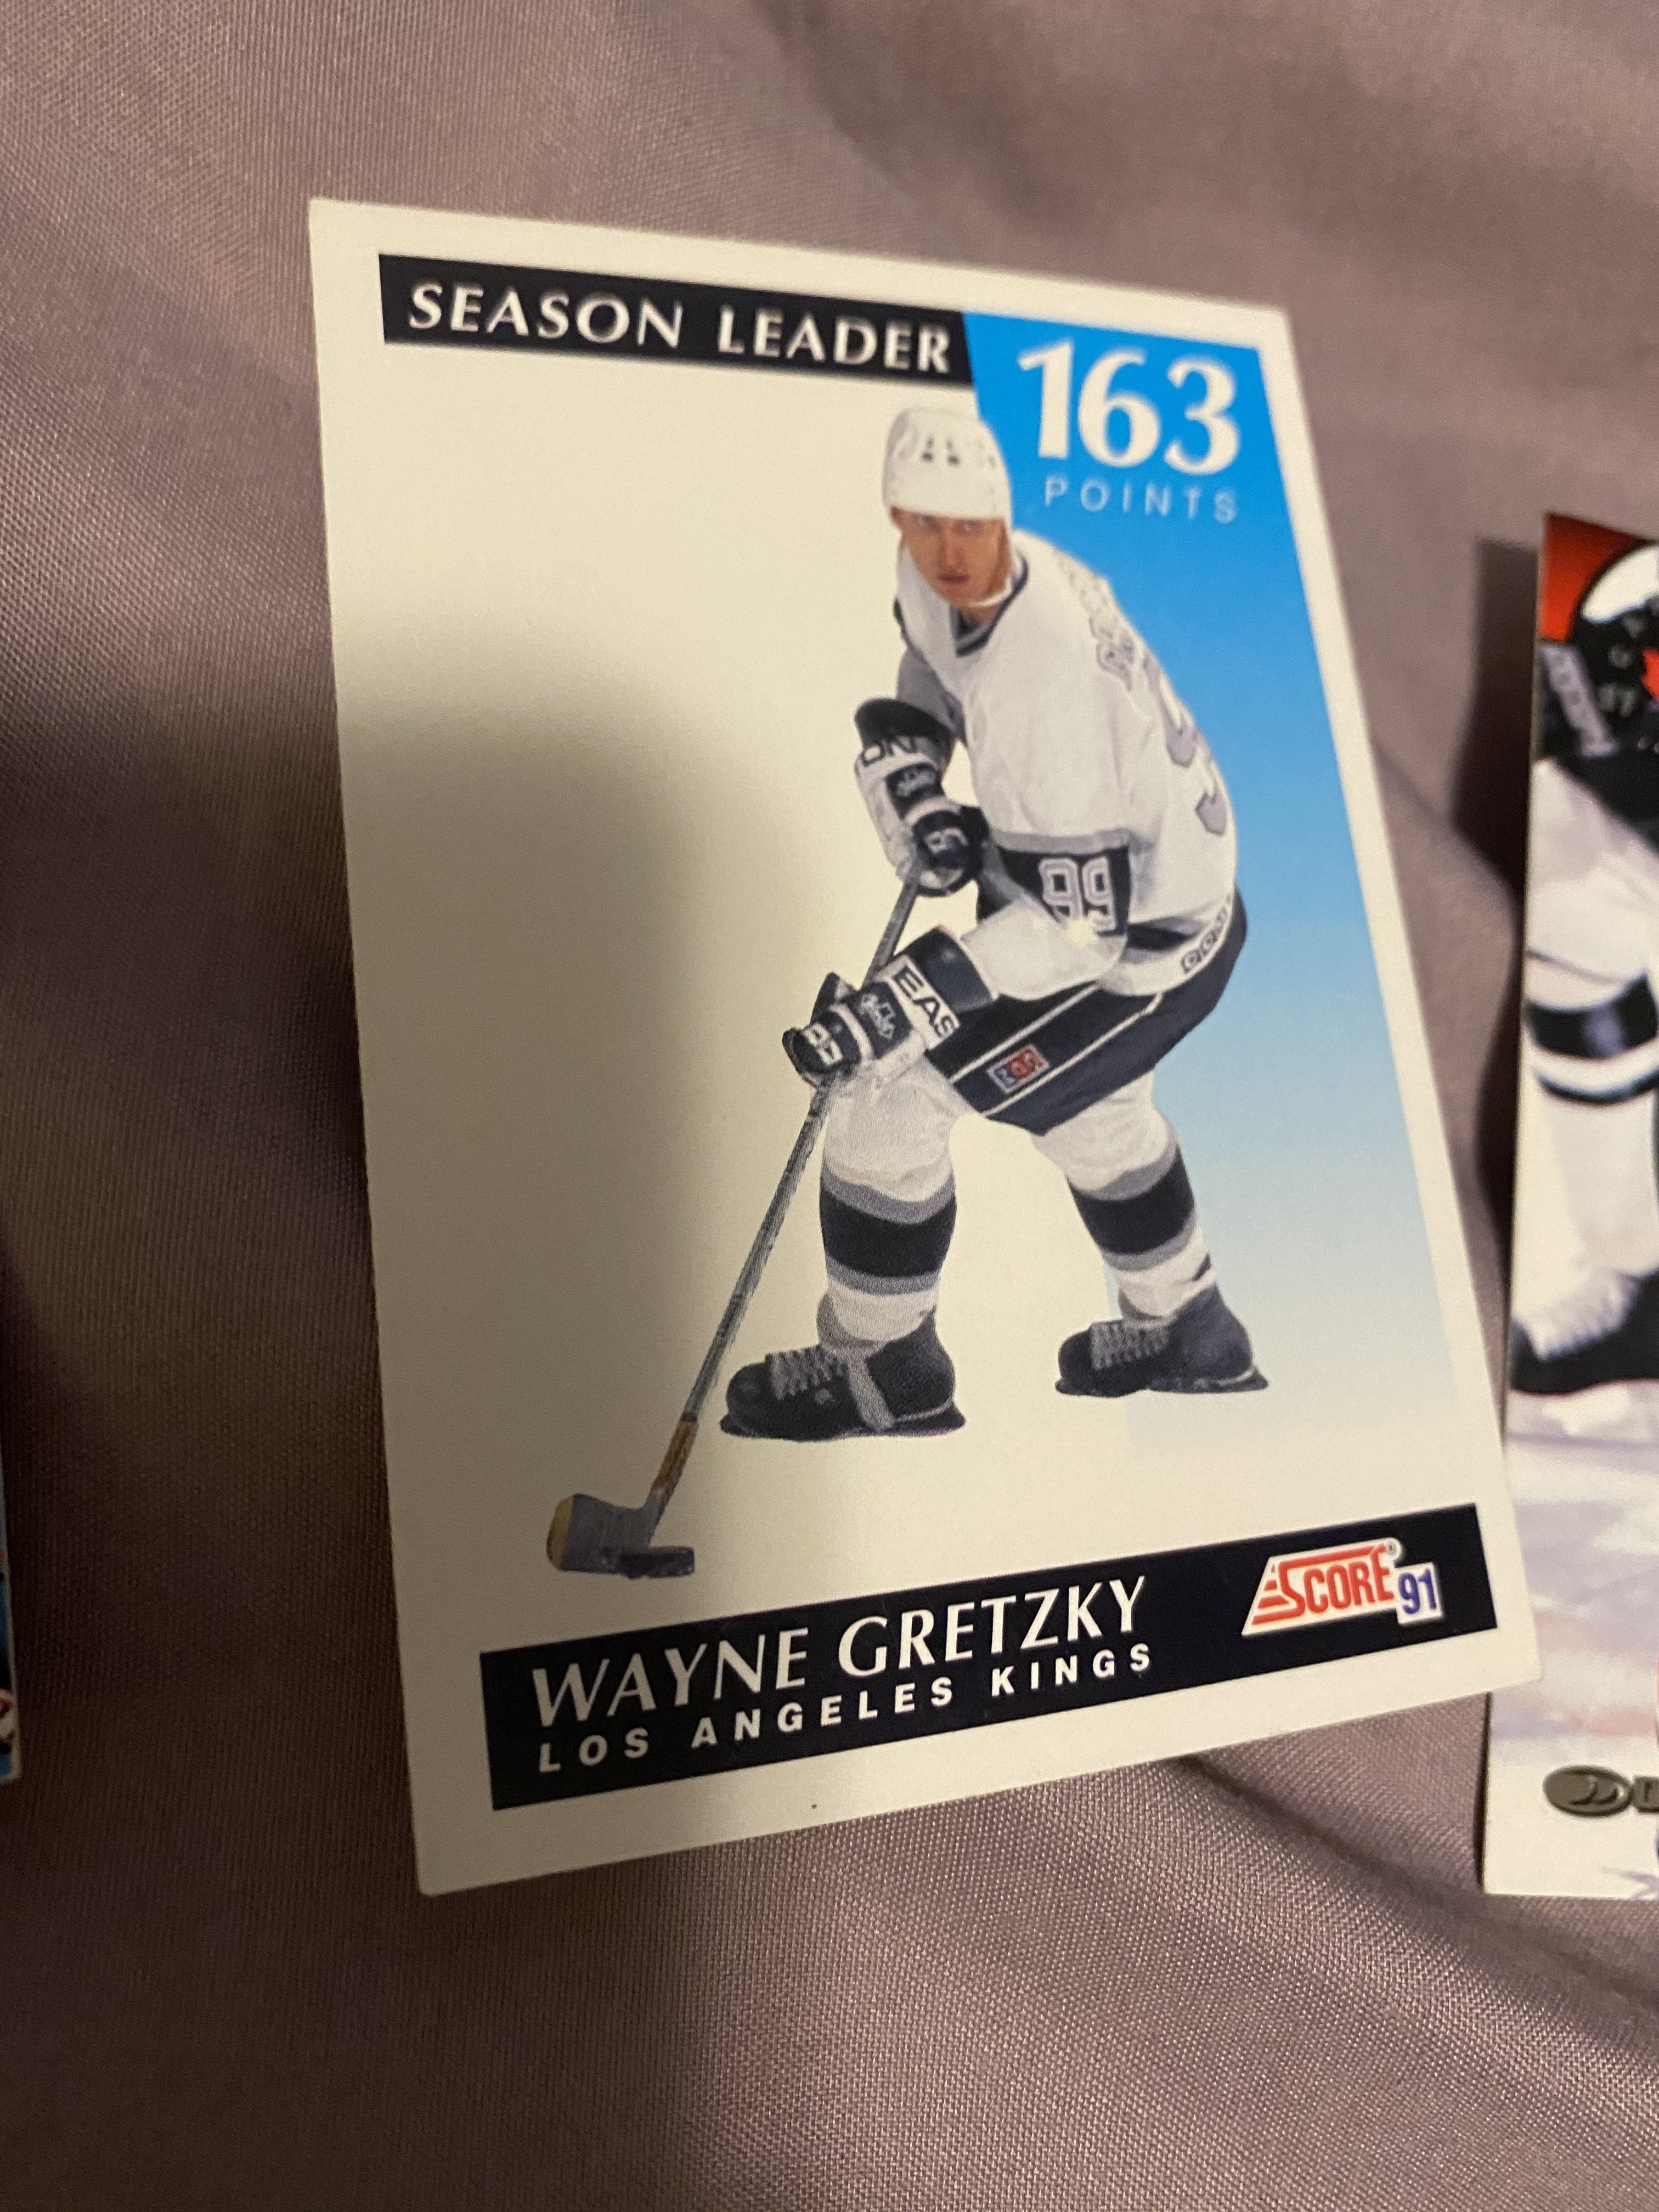 $1.29 million for a hockey card? Wayne Gretzky rookie card is